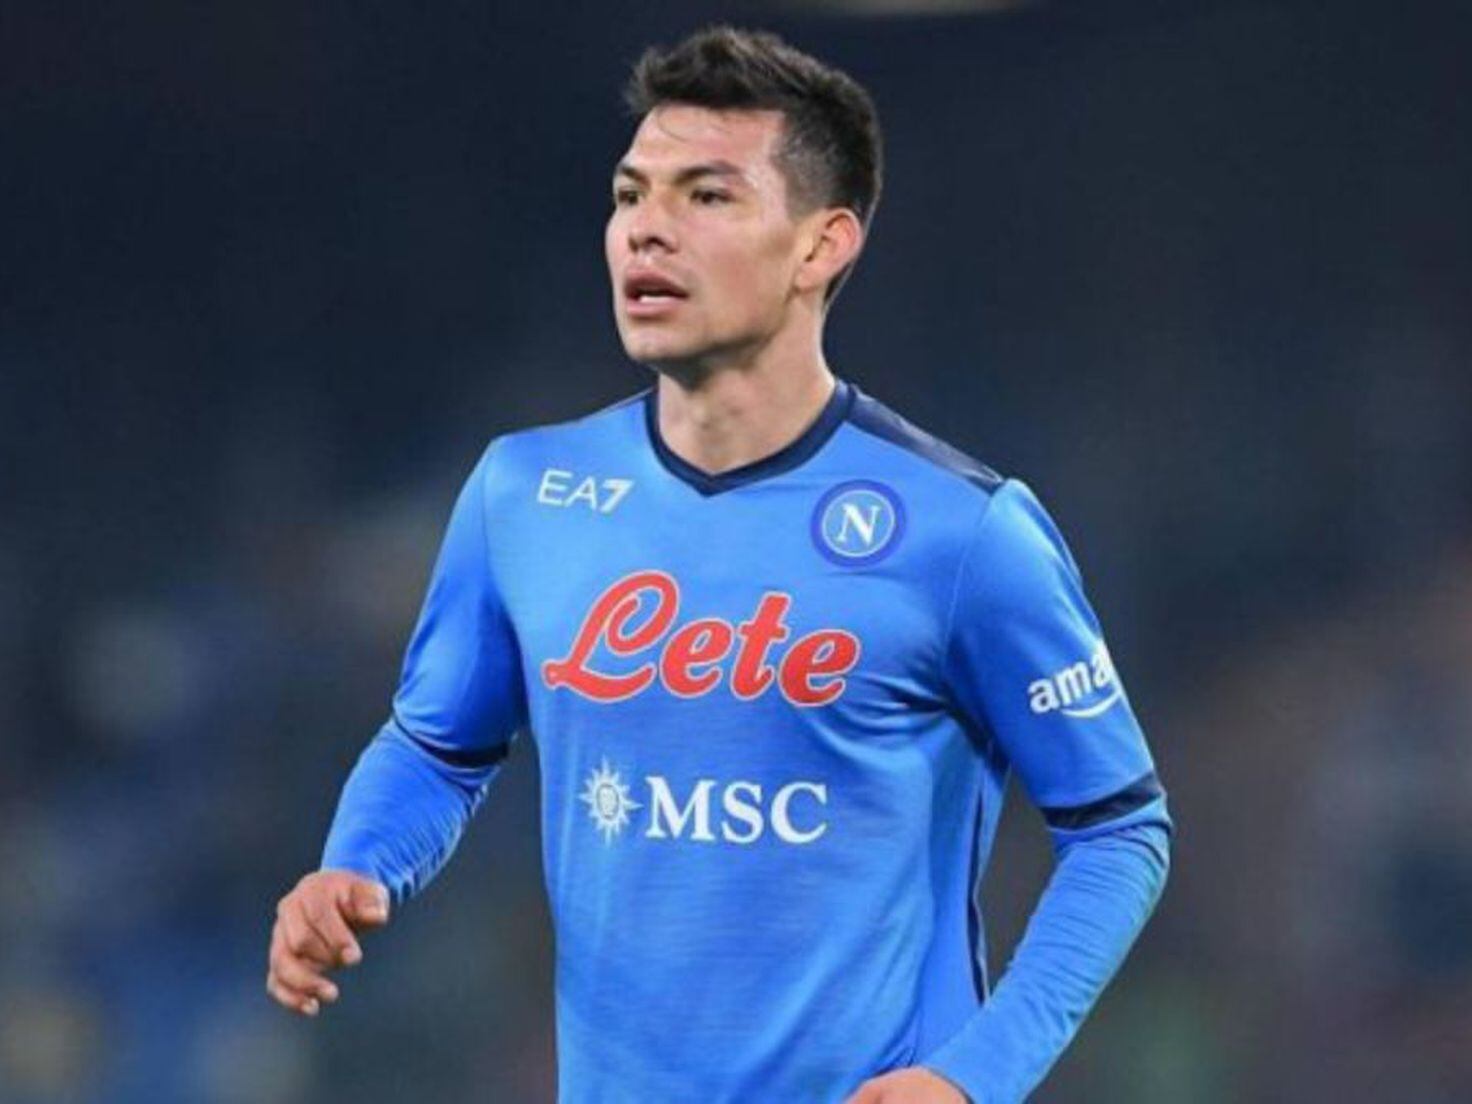 Napoli, Italy. 15th May, 2022. Hirving Lozano player of Napoli